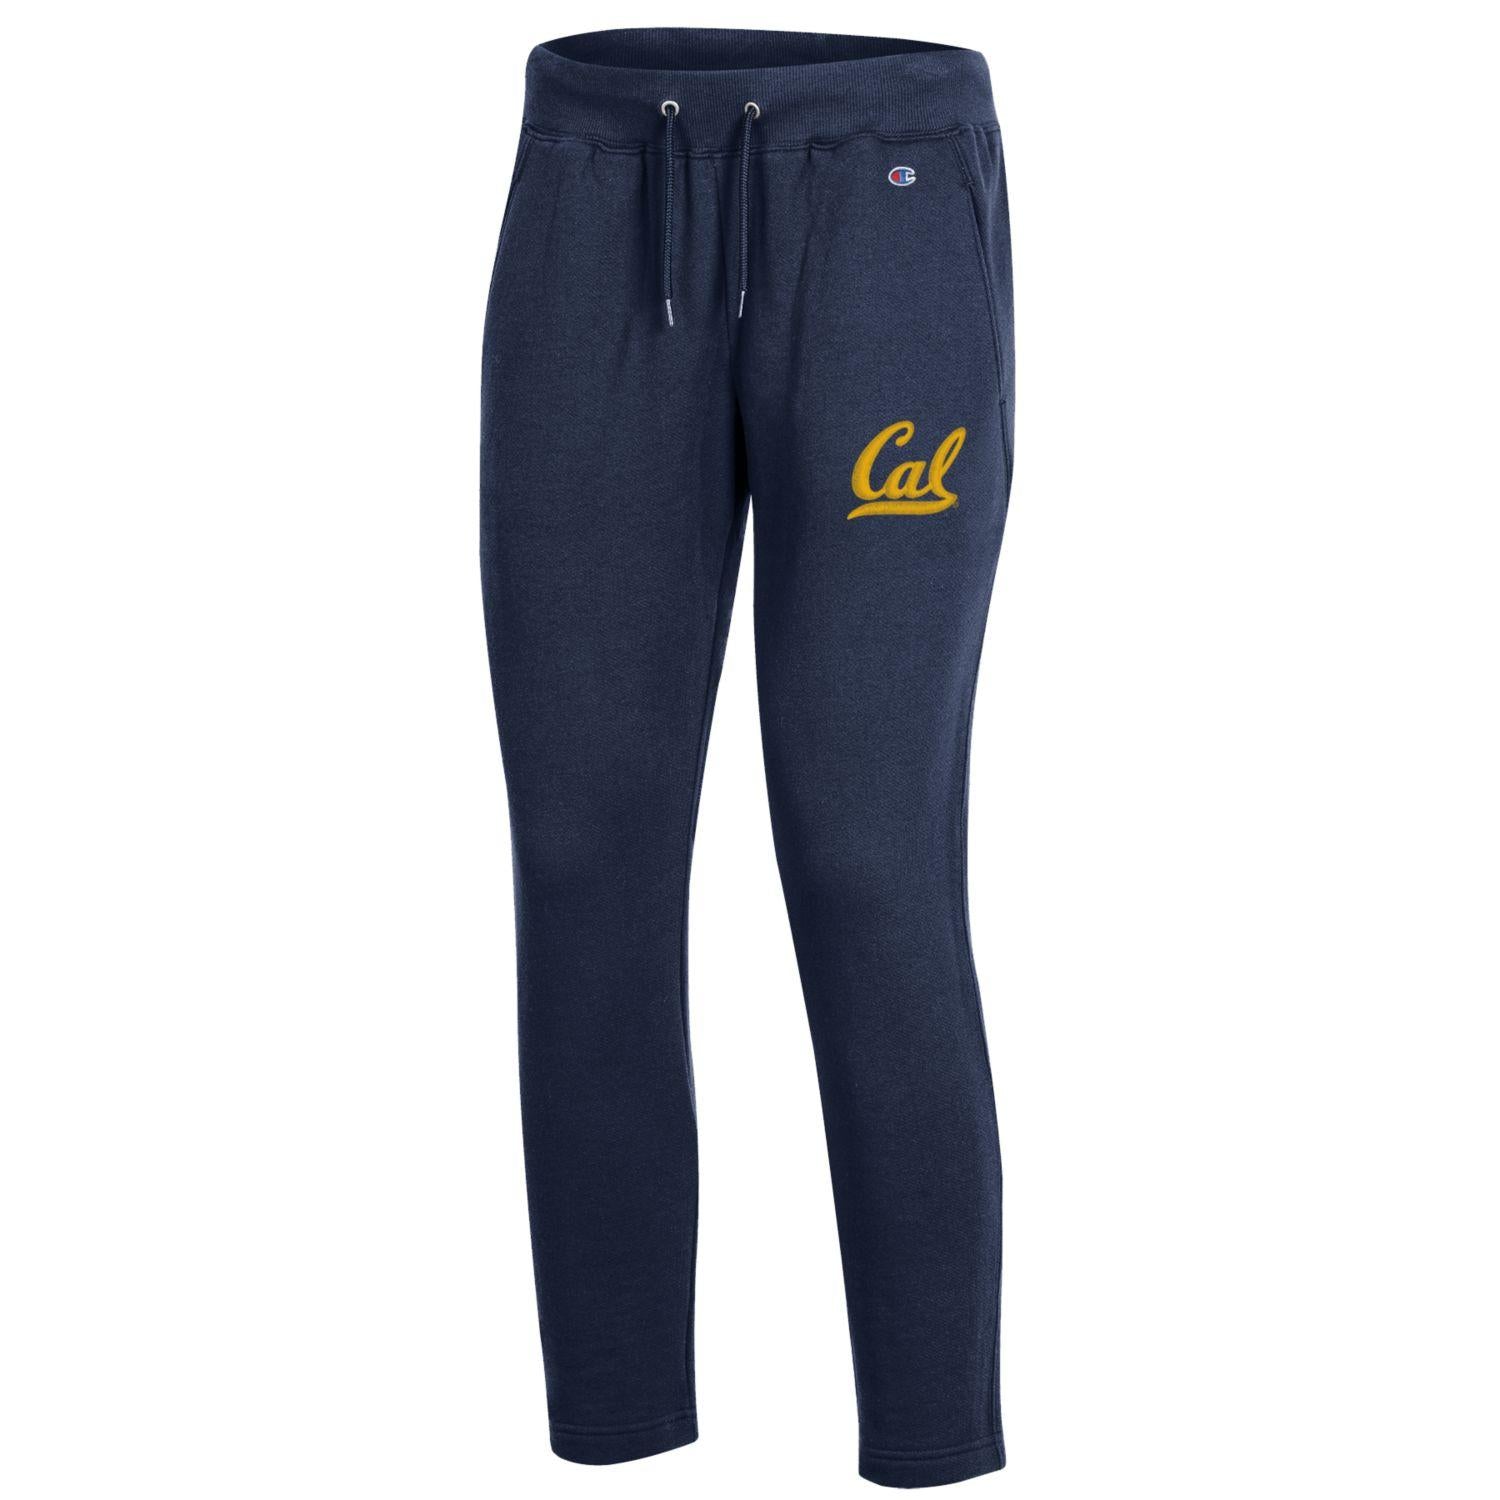 U.C. Berkeley Cal embroidered University pants-Navy-Shop College Wear